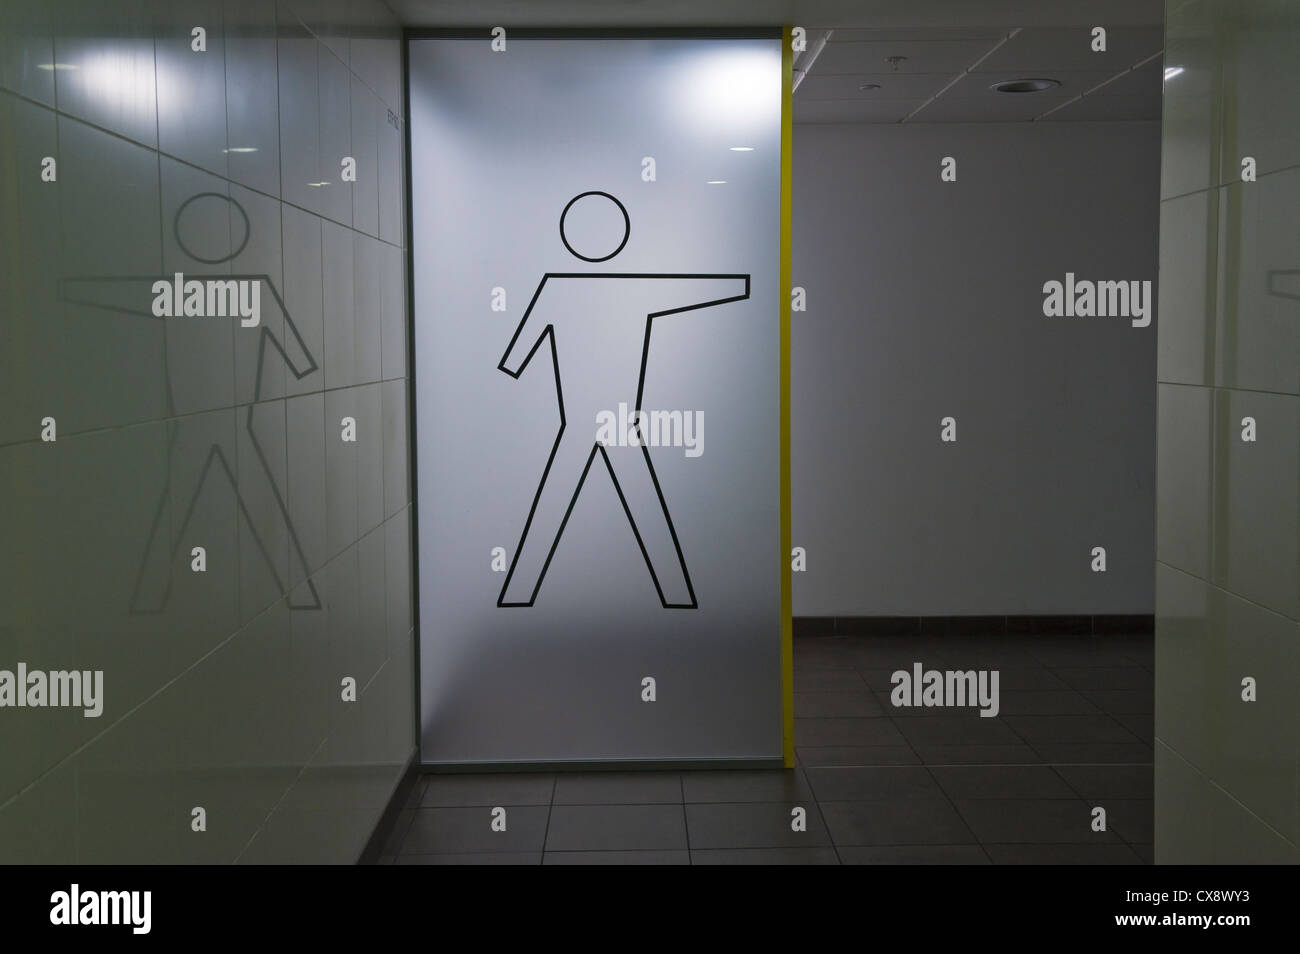 A sign indicating a men's toilet at Birmingham airport, UK Stock Photo